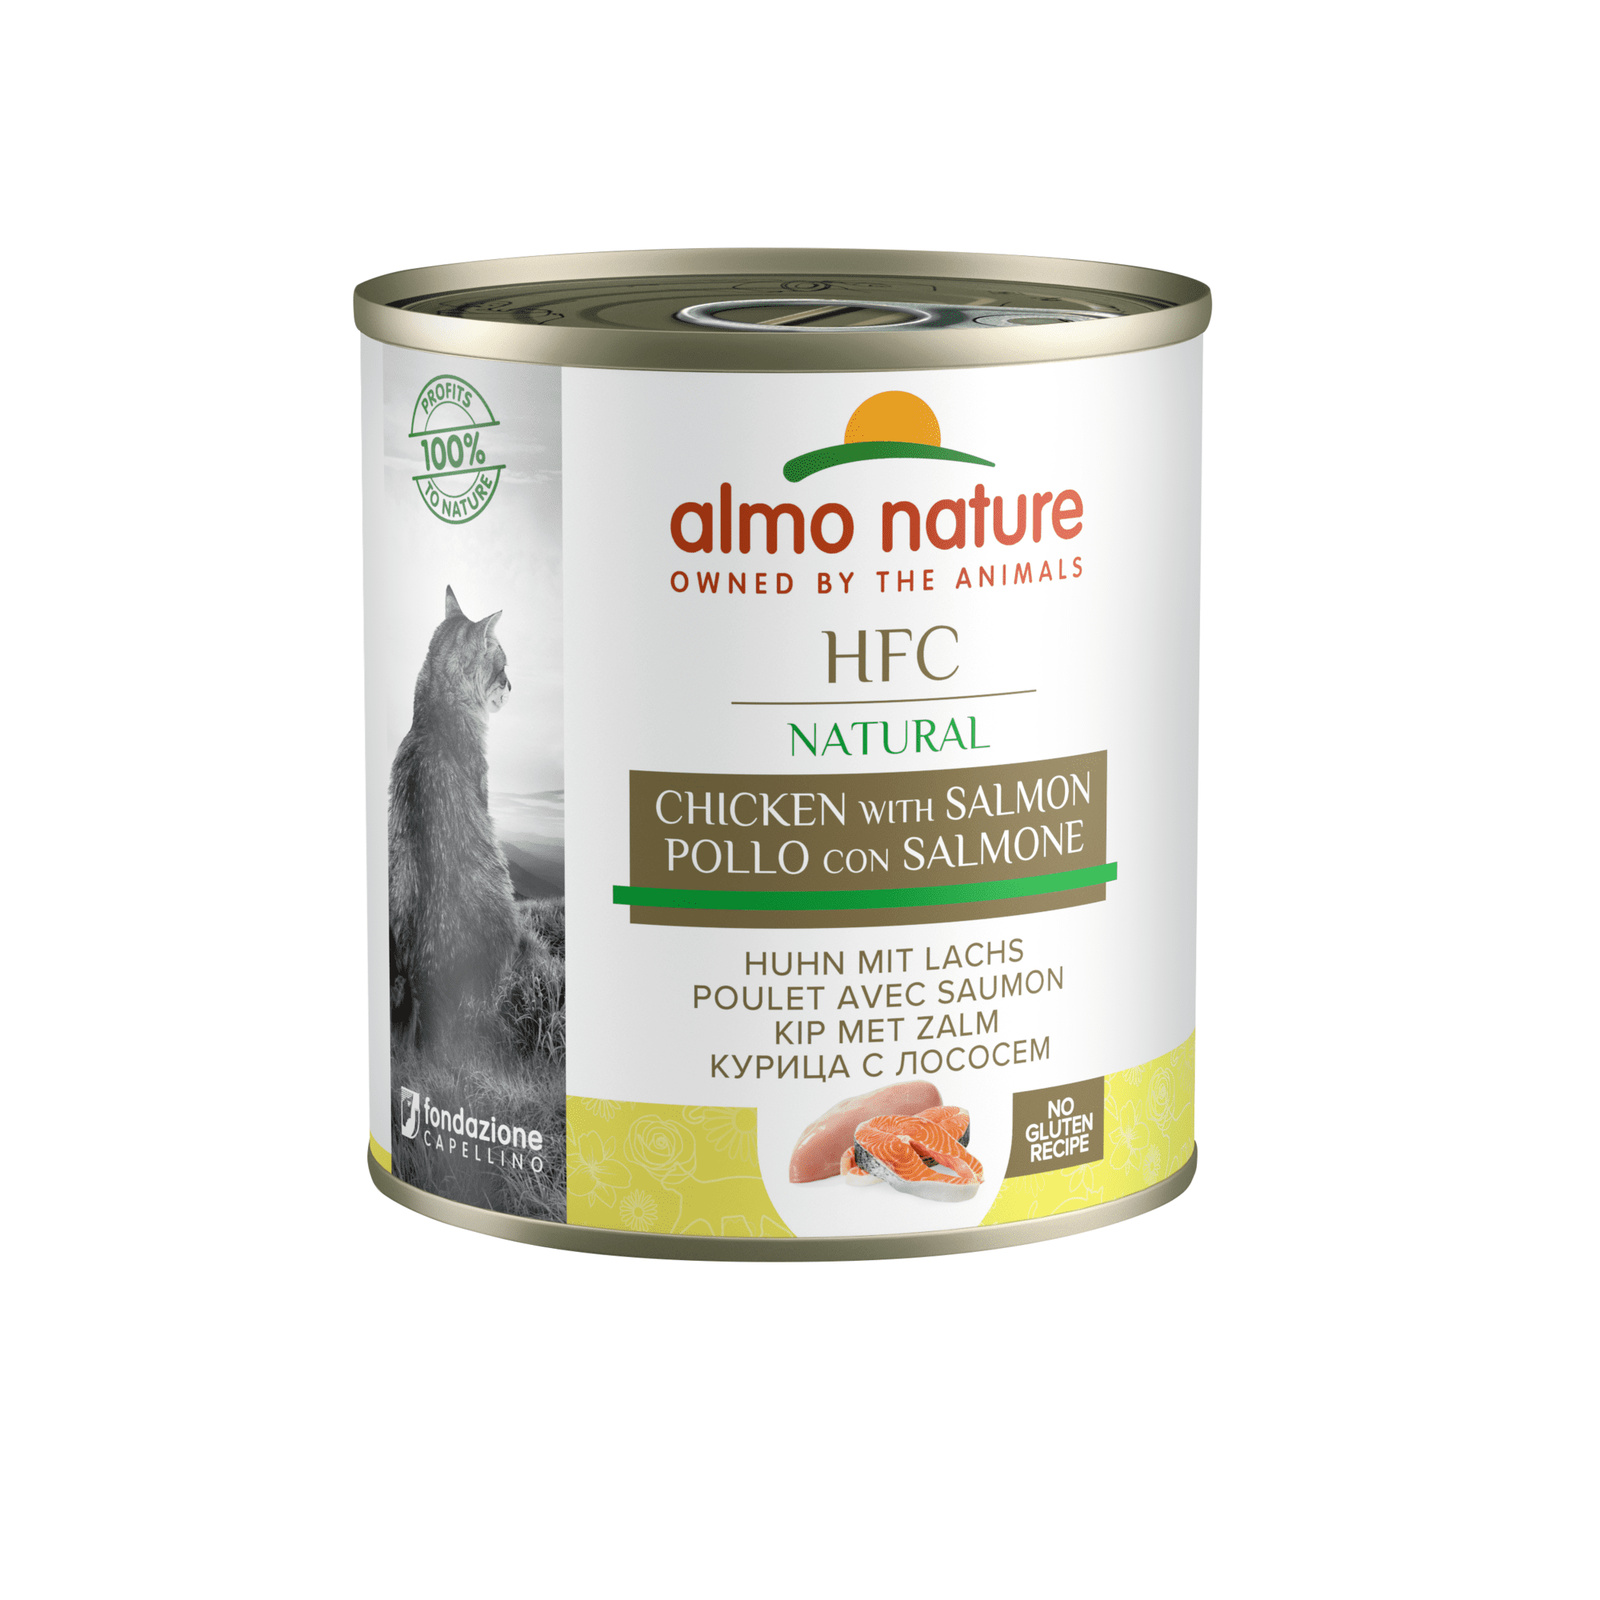 Almo Nature консервы Almo Nature консервы для кошек, с лососем и курицей (280 г) консервы для кошек almo nature legend с курицей и сыром 75% 70 г